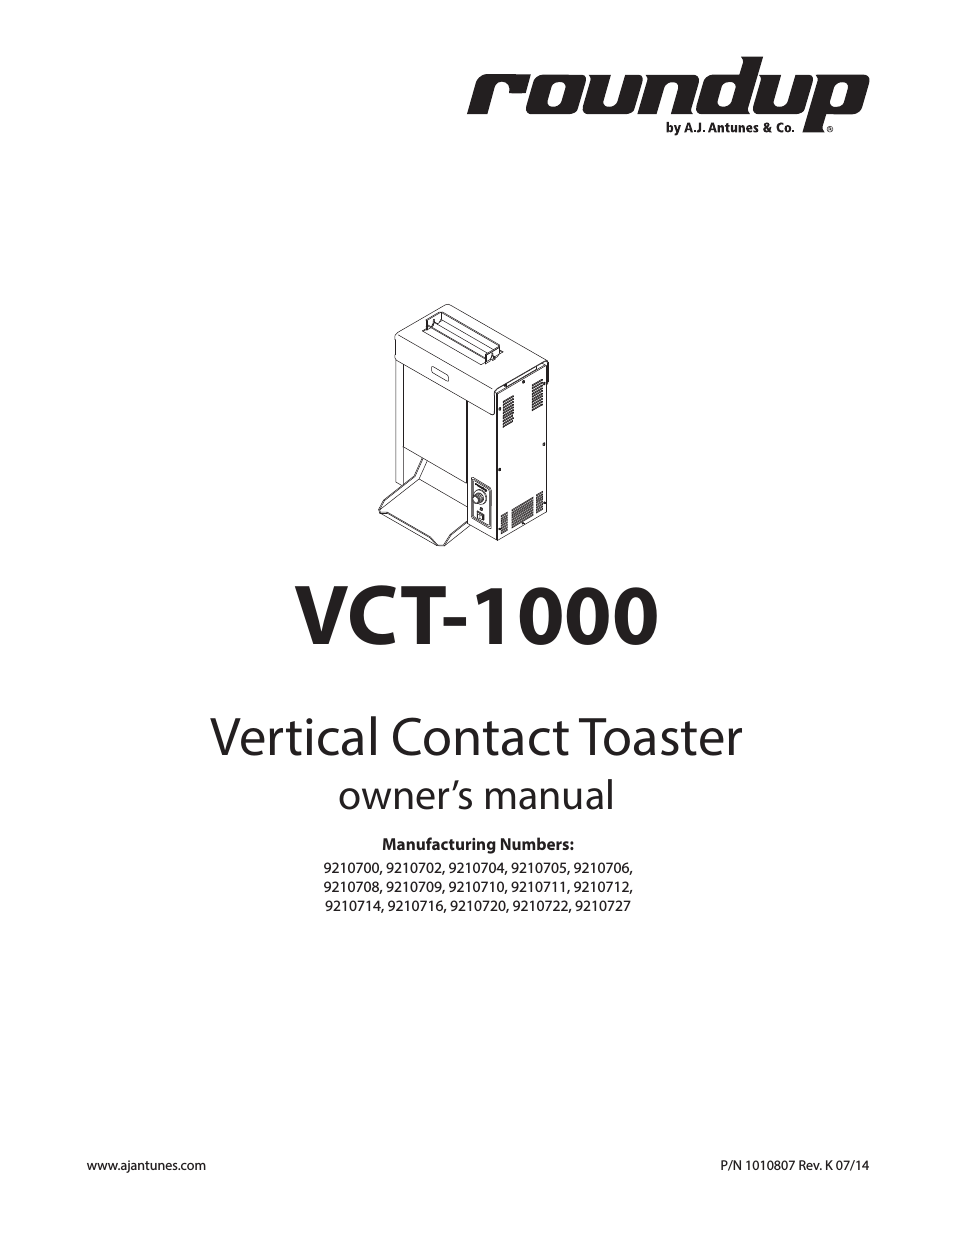 VCT-1000 9210704